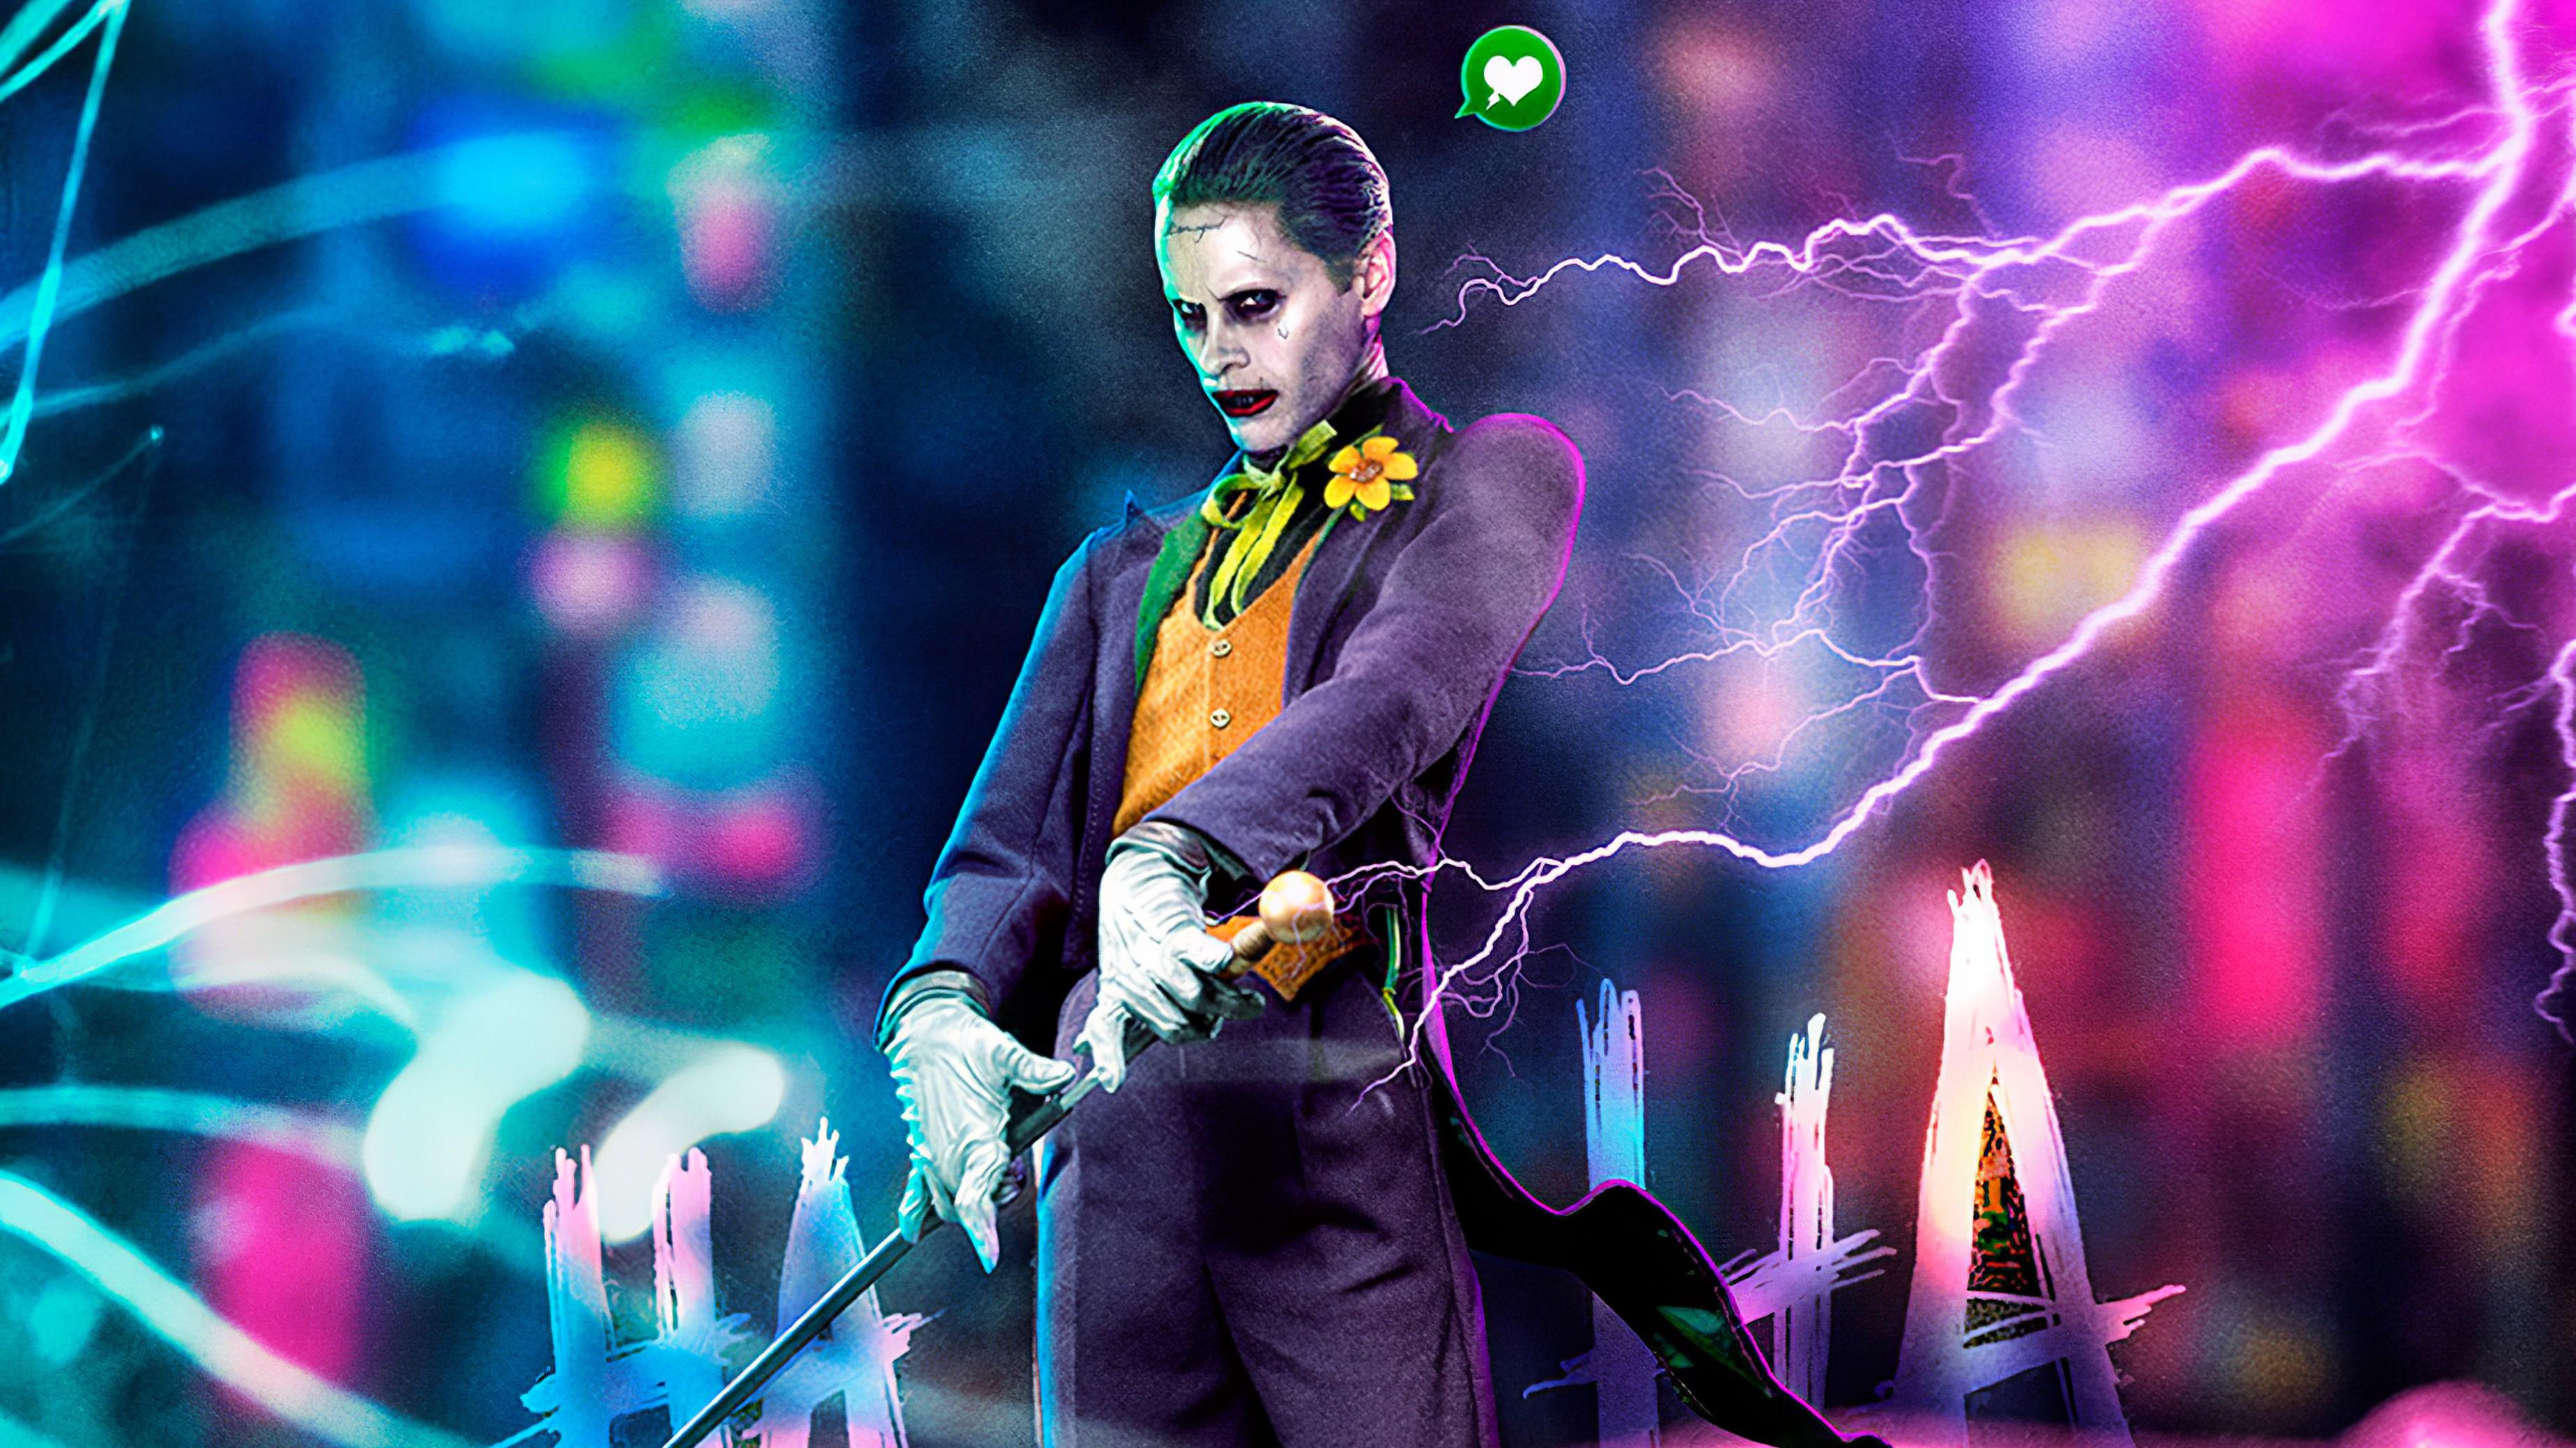 Wallpaper Id Jared Leto Joker Supervillain Superheroes